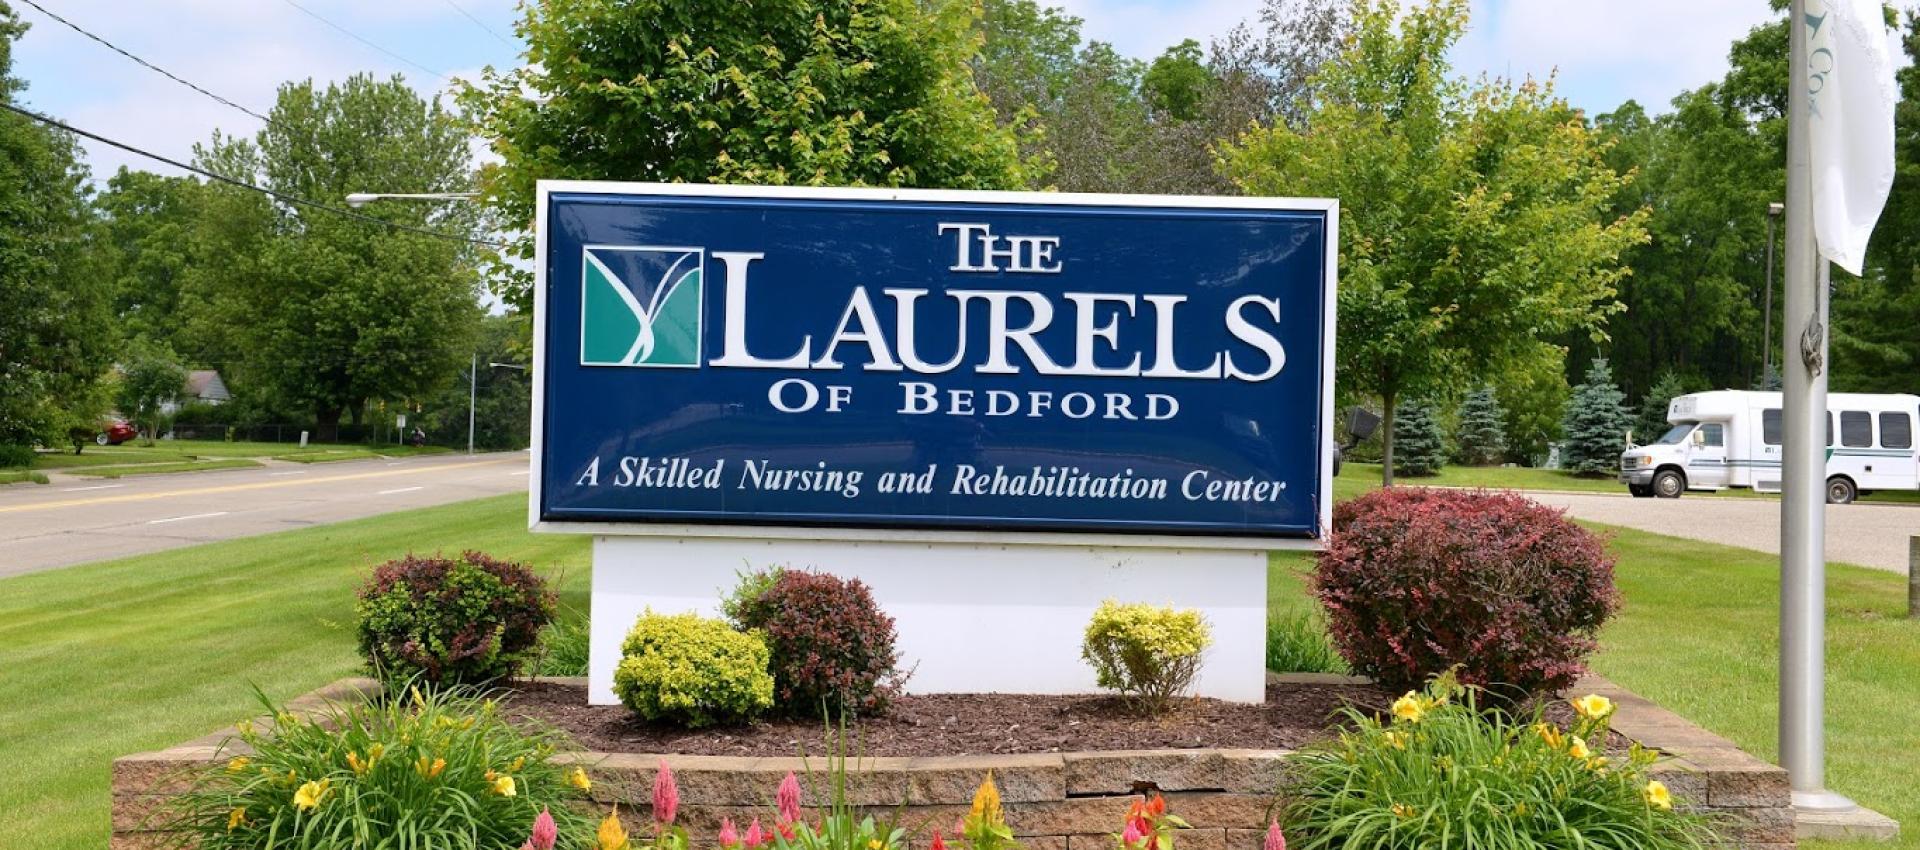 The Laurels of Bedford